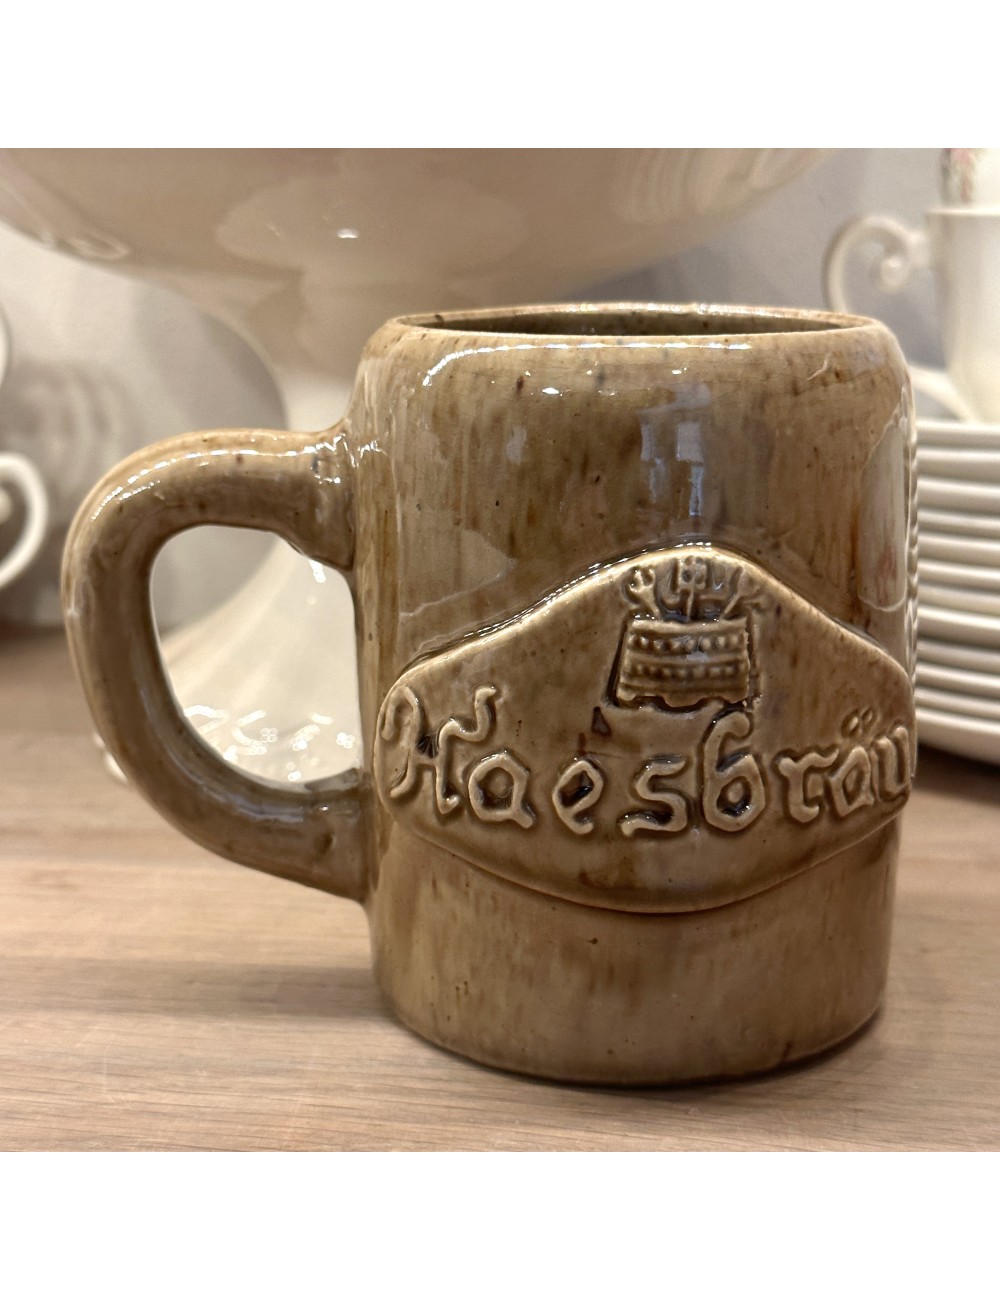 Beer mug - handmade by A. Noseda of Kuurne - marked inside bottom - light brown model